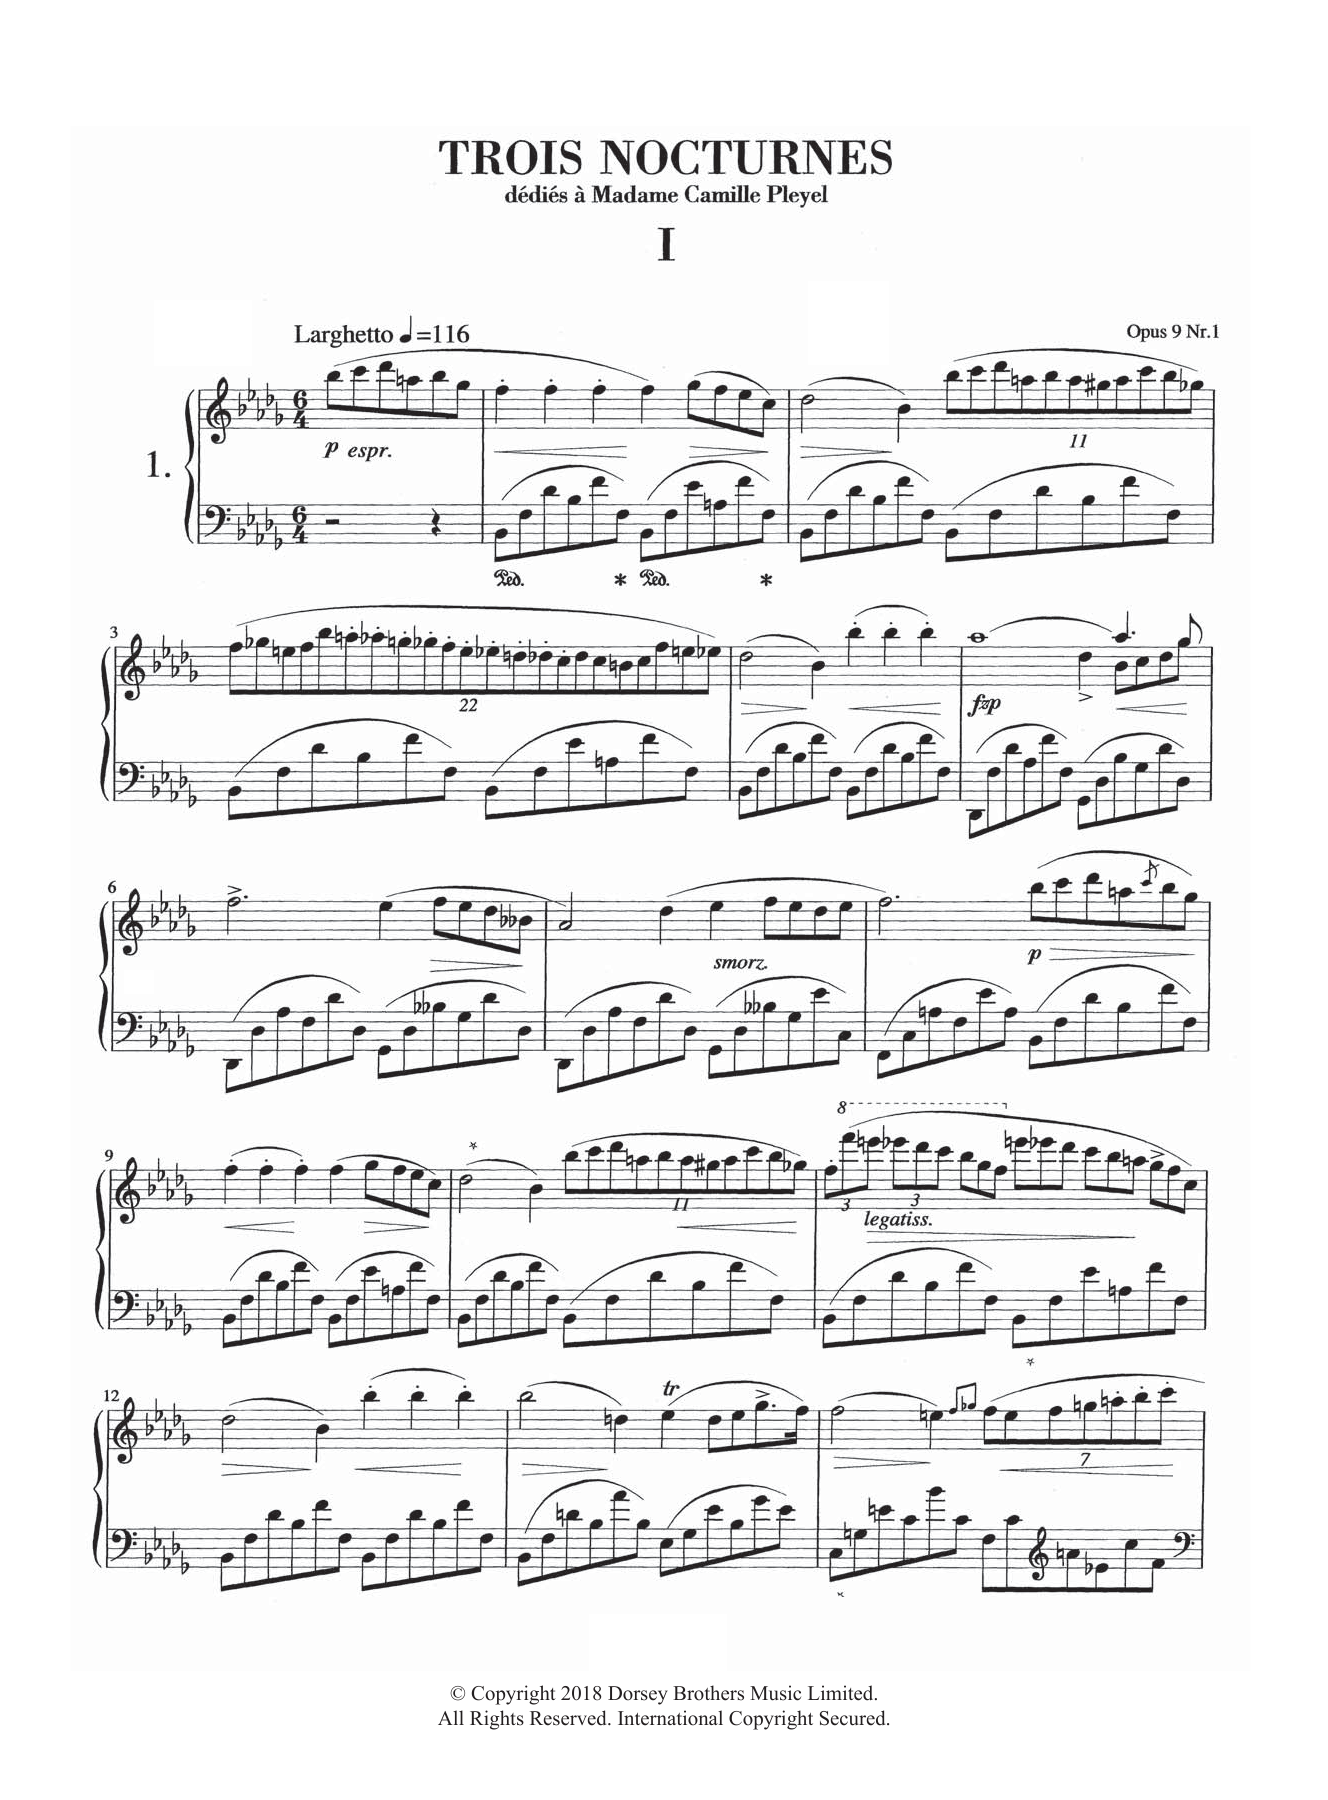 Nocturne in B Flat Minor, Op. 9, No. 1 sheet music